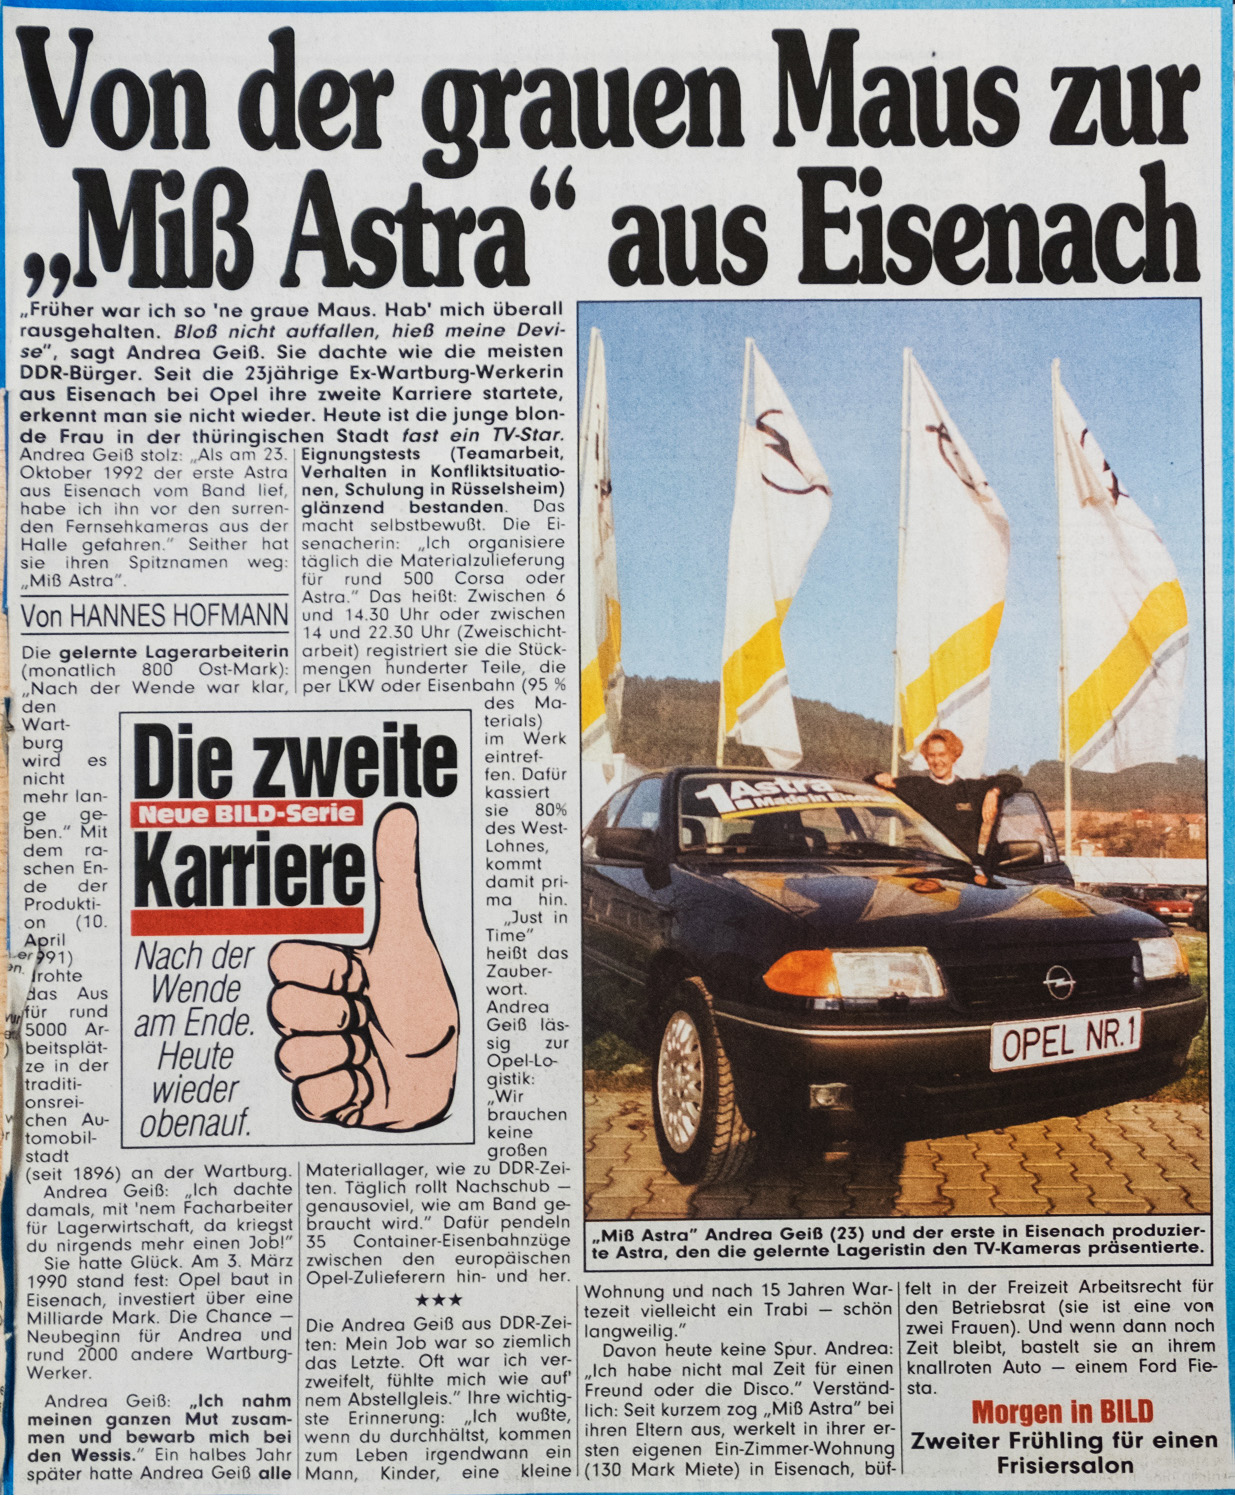 Promistatus: Medien wie die Bild-Zeitung berichteten in den 90er-Jahren über Andrea Geiß.